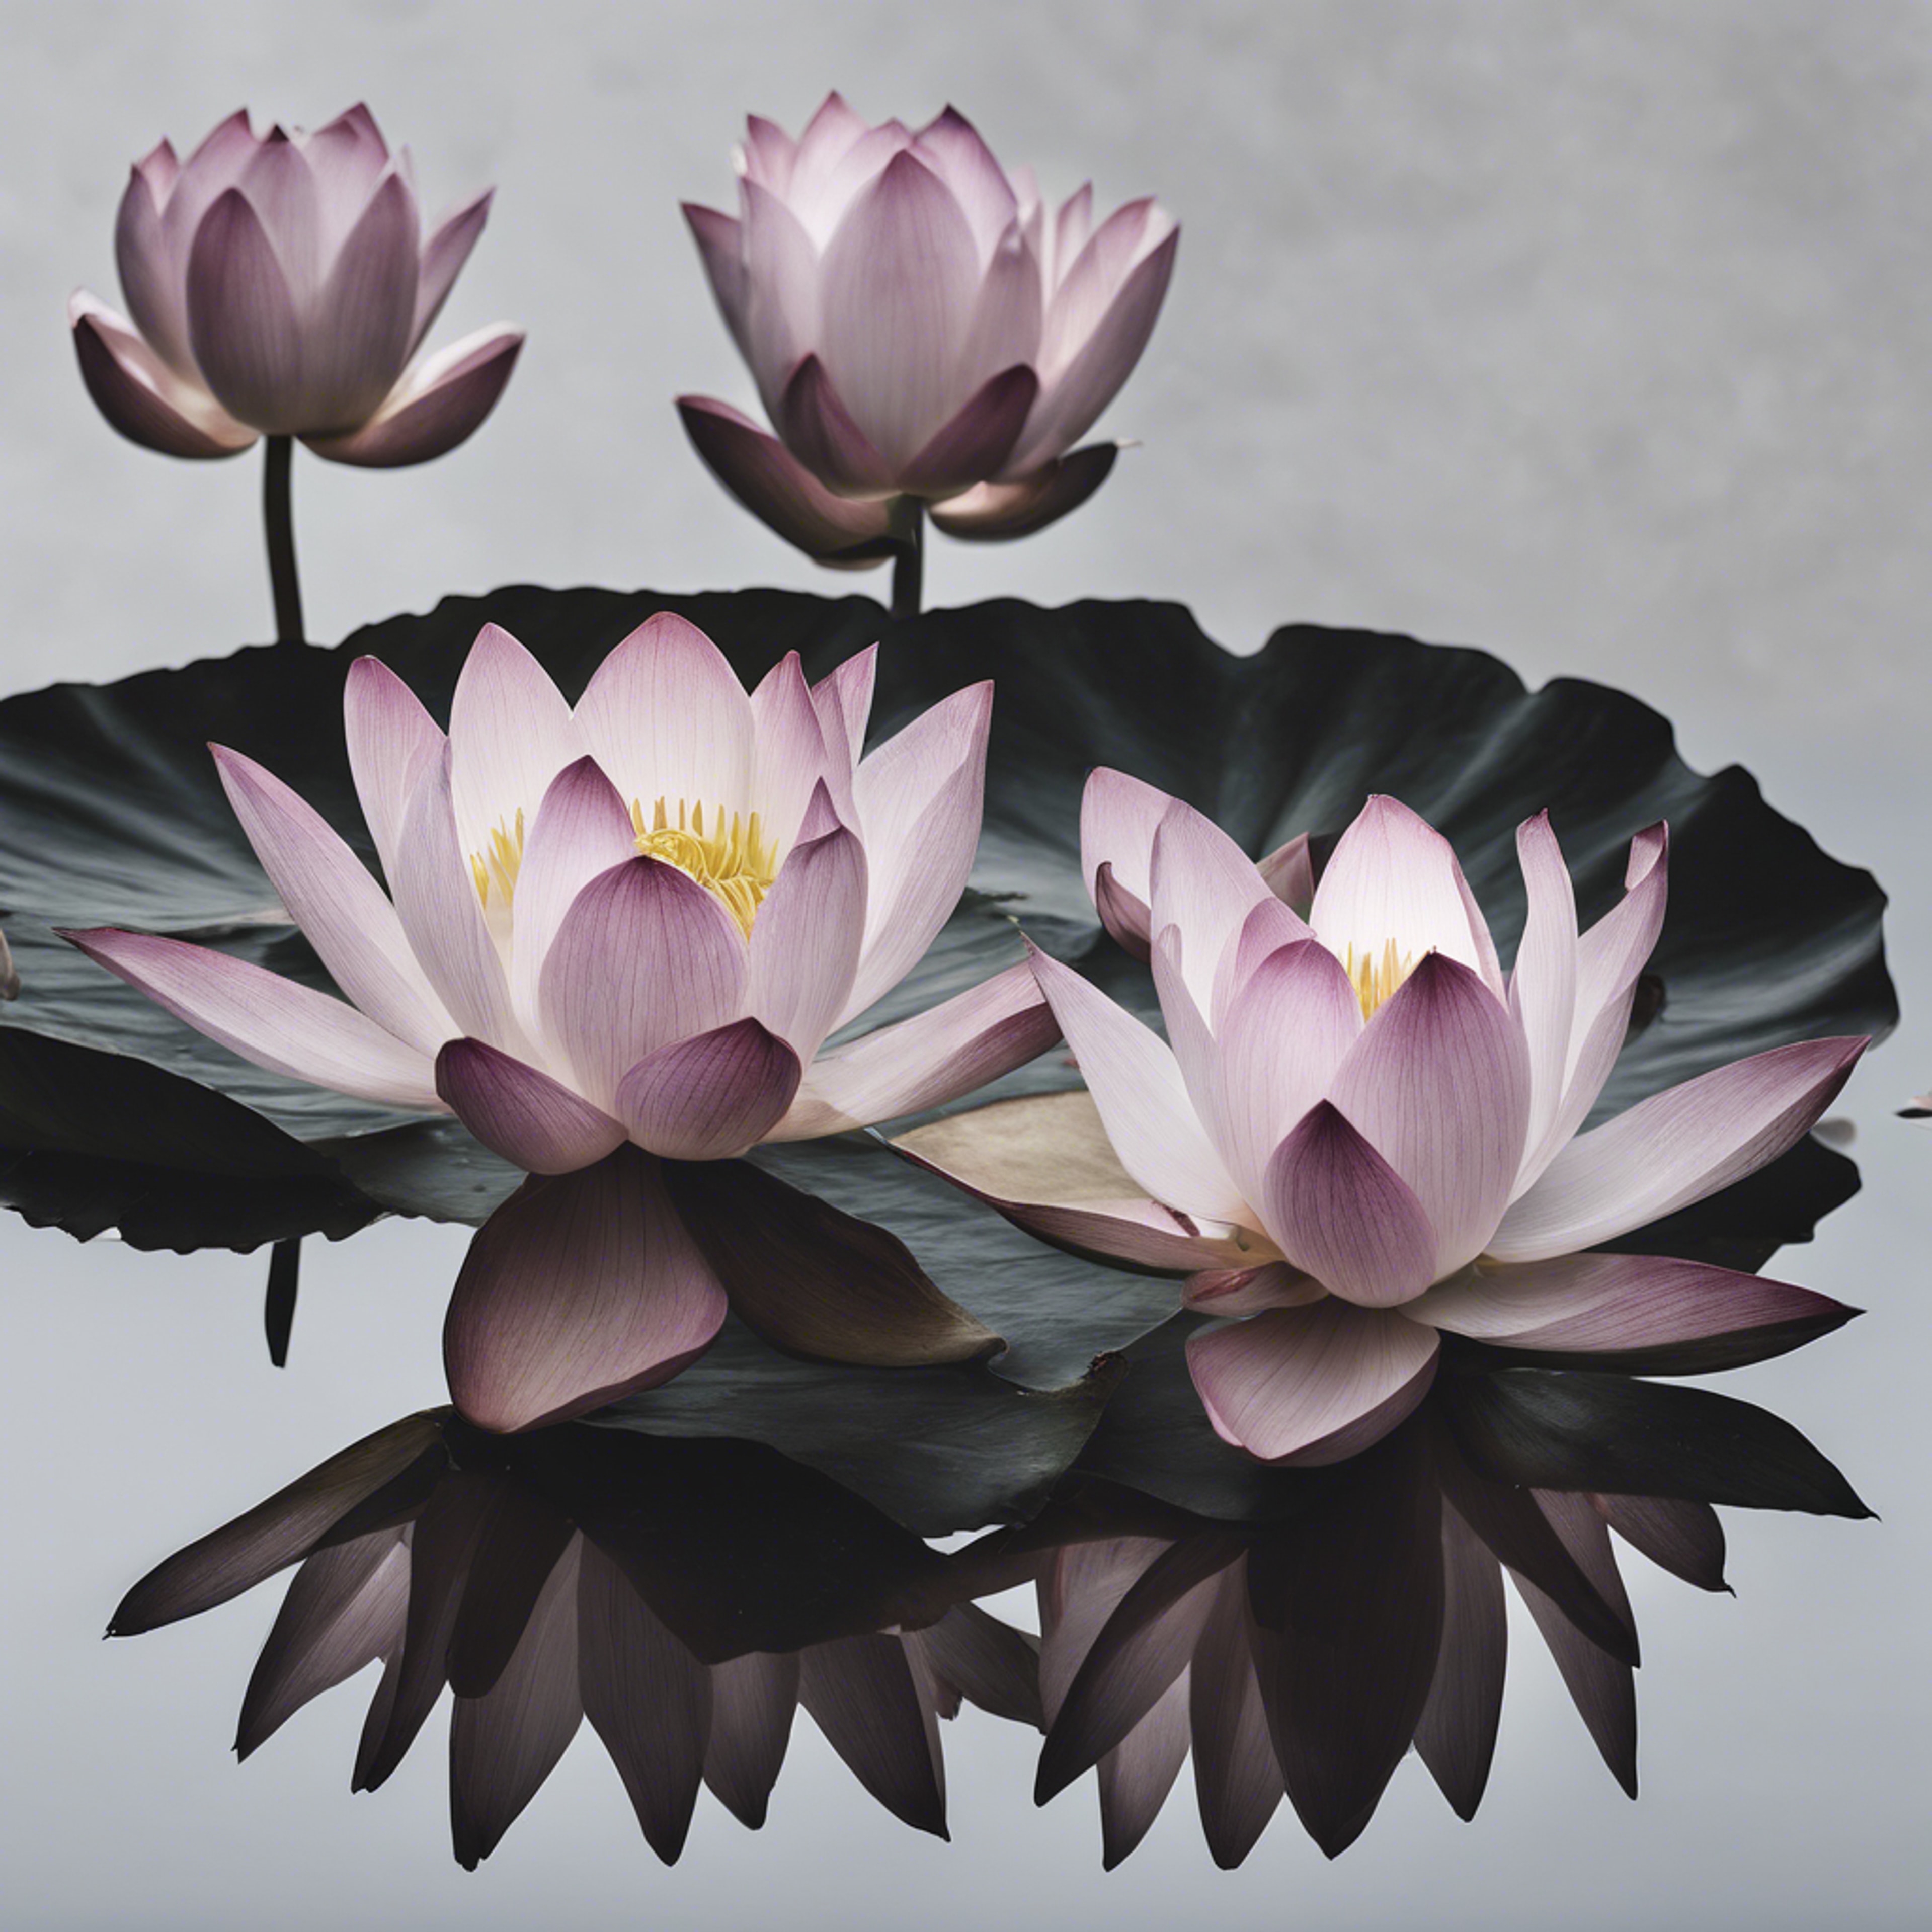 Dark lotuses floating elegantly on a textured white canvas. Tapeta[326d2c6a66b946e99dbc]